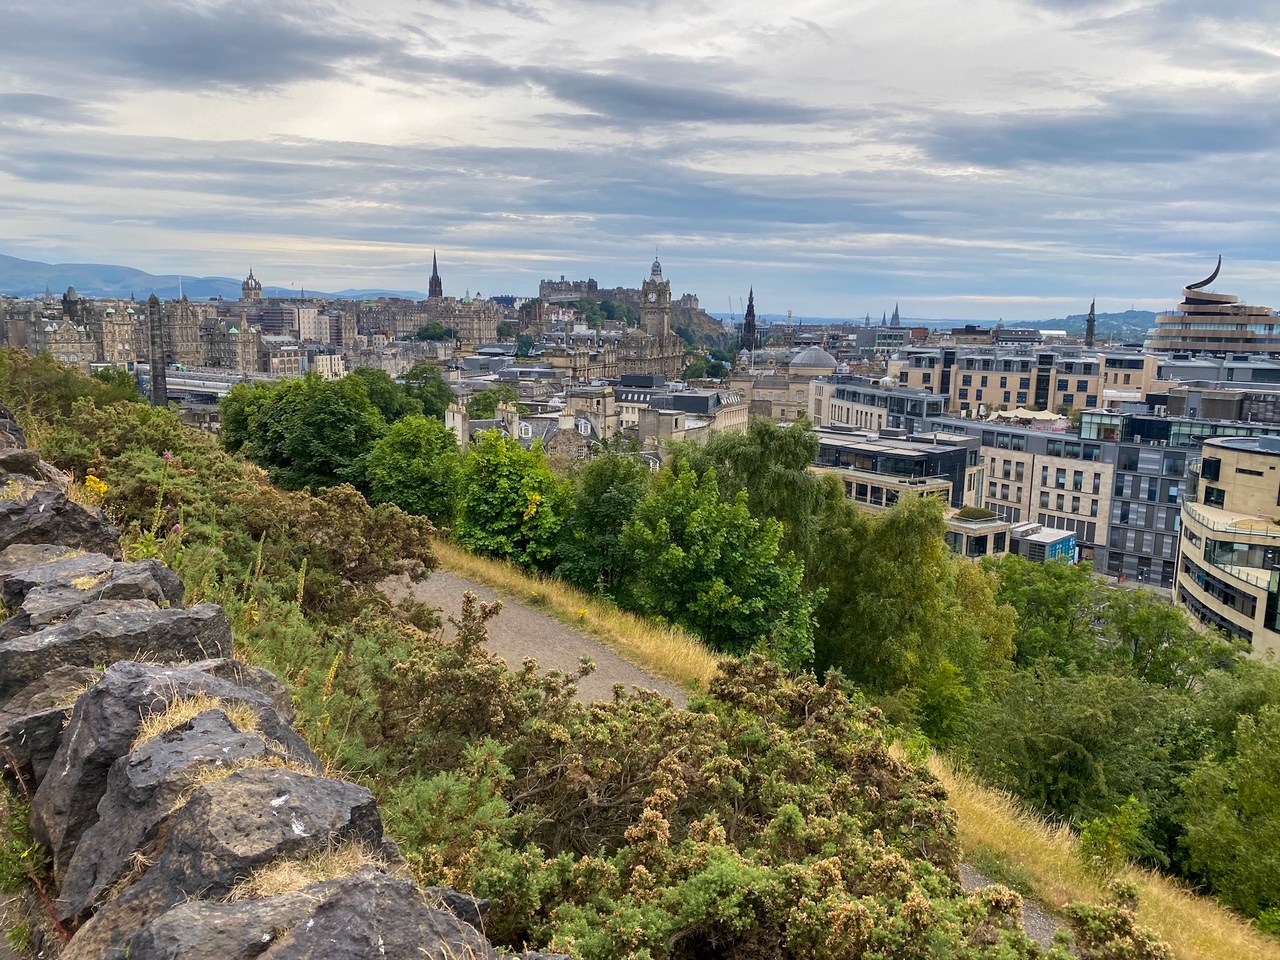 stunning view of Edinburgh from Calton Hill